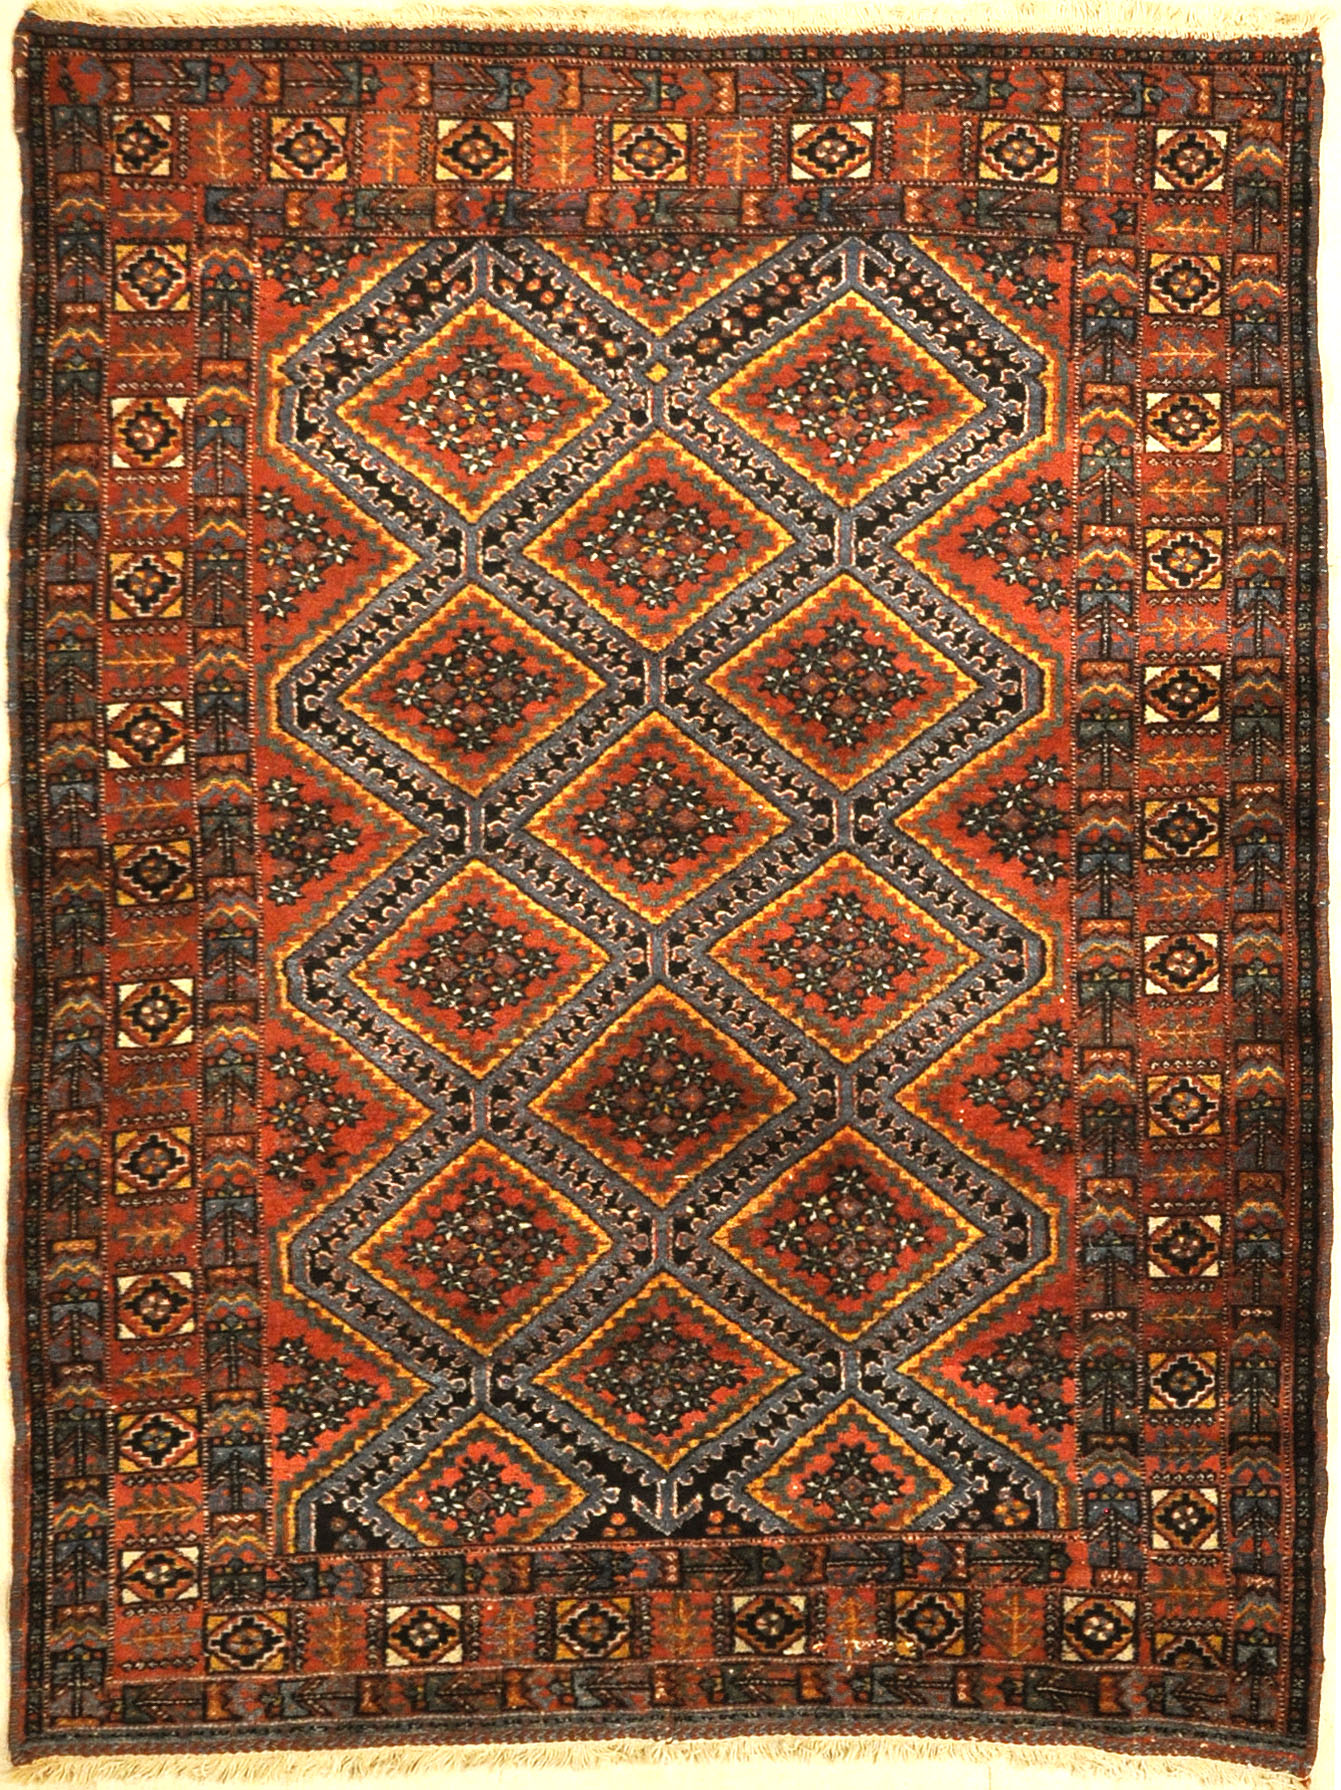 An antique Persian Afshar rug featuring a diamond pattern. A piece of genuine original woven carpet art sold by the Santa Barbara Design Center.